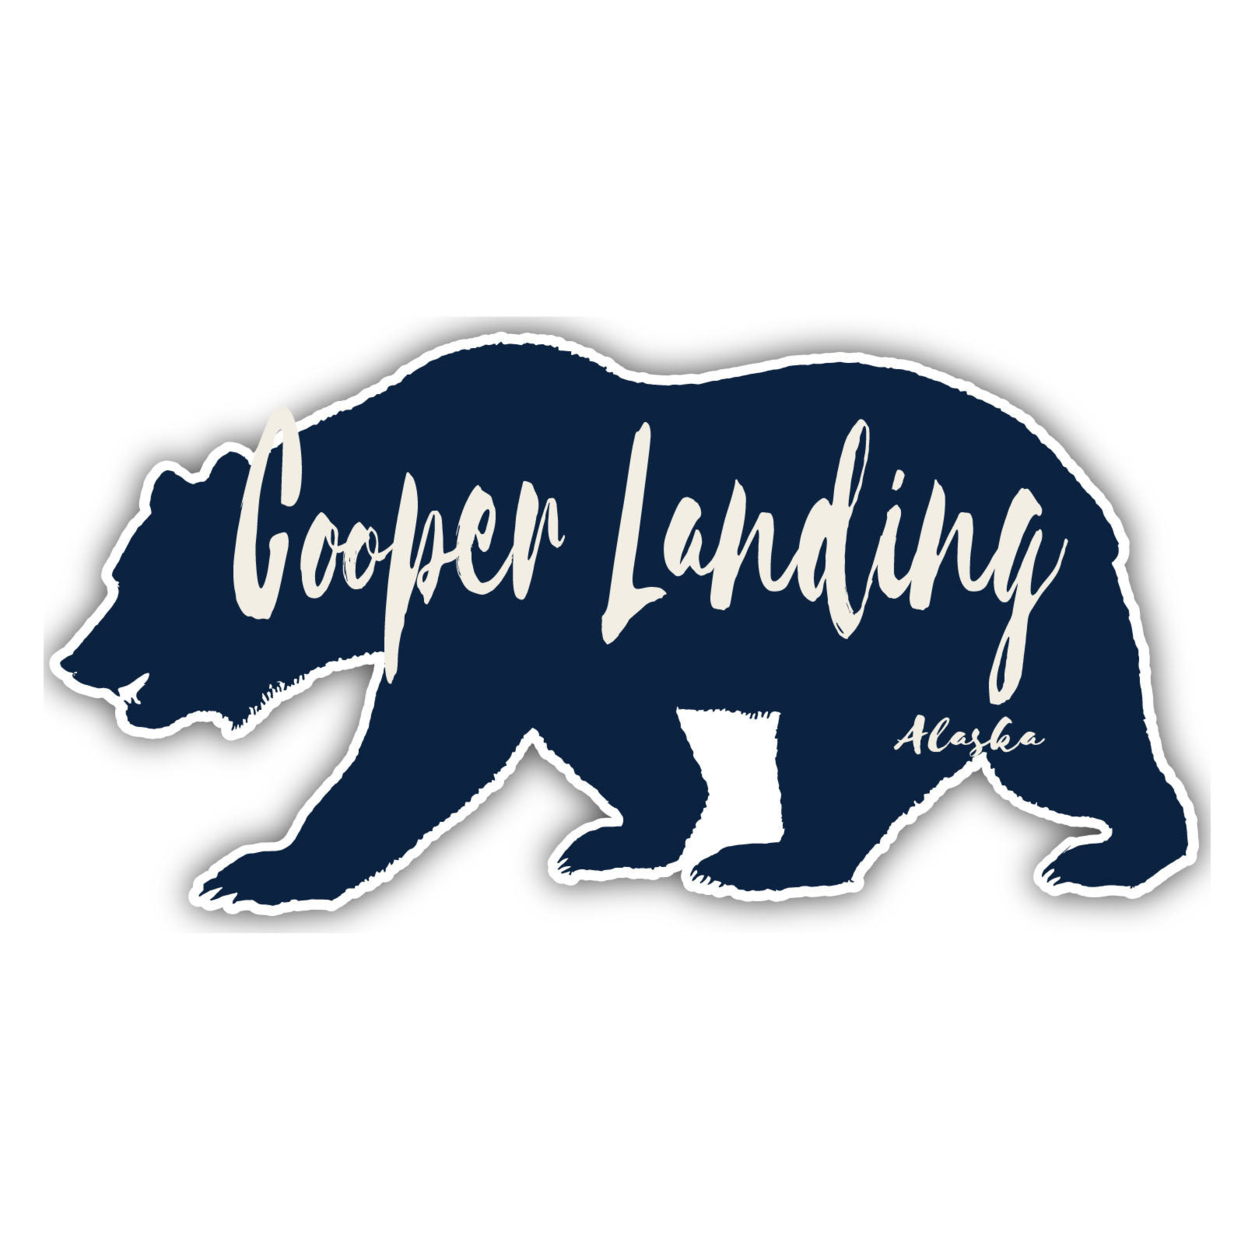 Cooper Landing Alaska Souvenir Decorative Stickers (Choose Theme And Size) - Single Unit, 8-Inch, Adventures Awaits